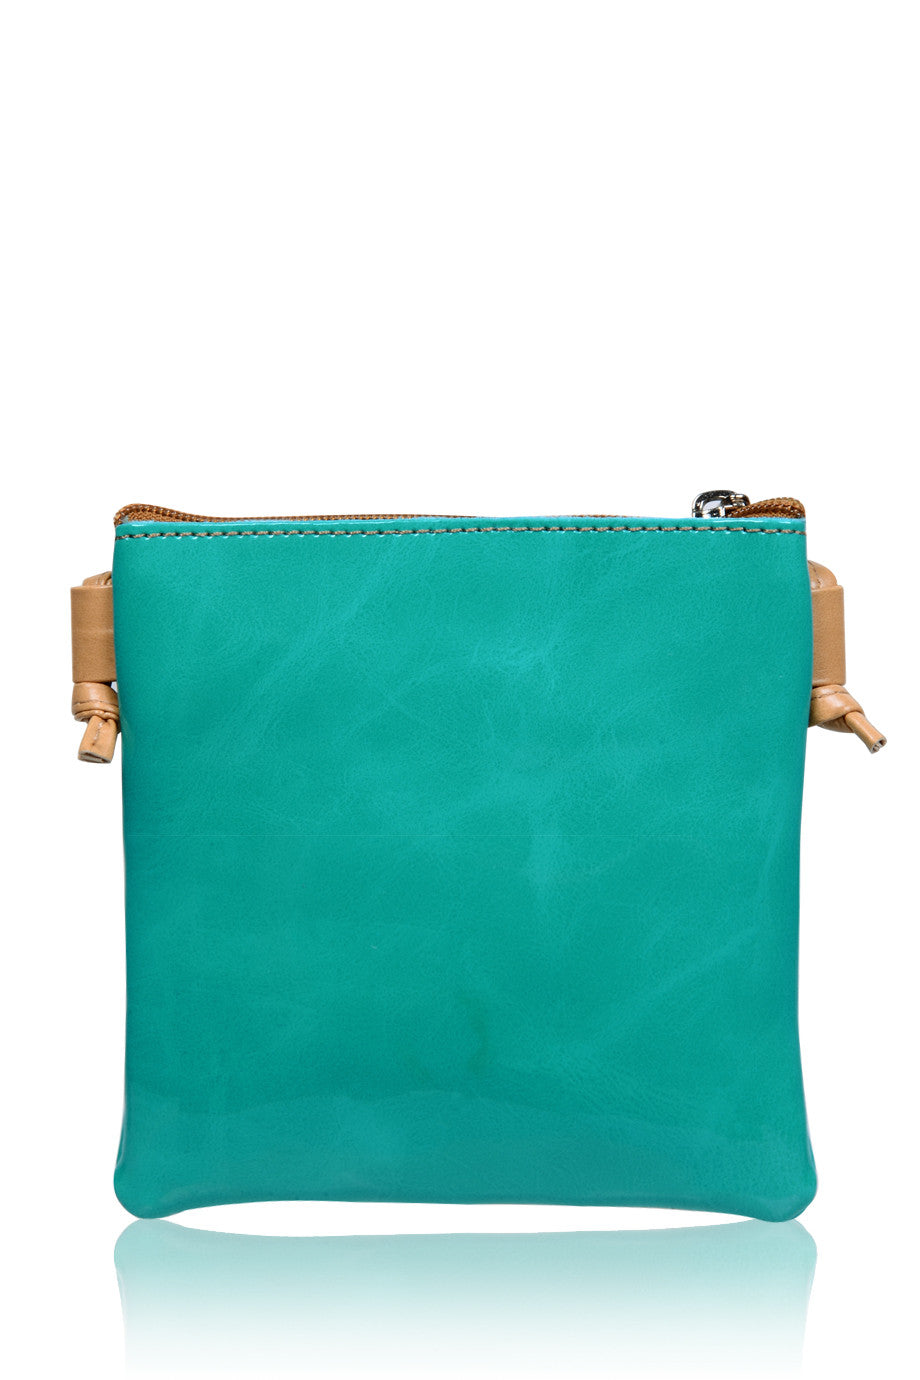 MINI DAISY Veraman Patent Leather Bag